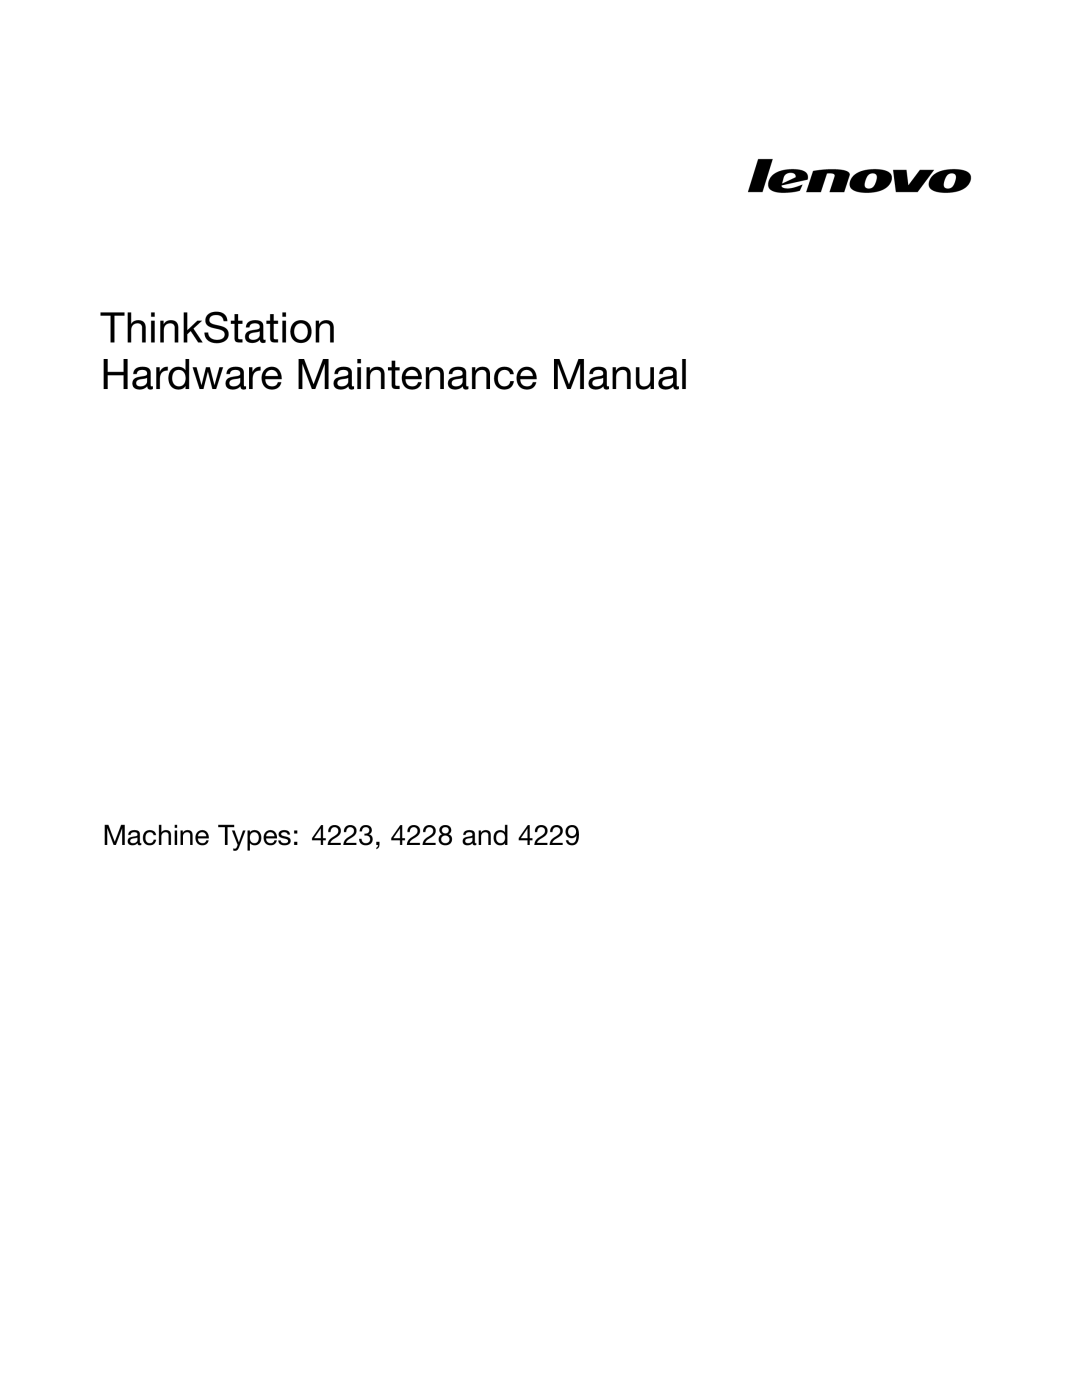 Lenovo 4223, 4228, 4229 manual ThinkStation Hardware Maintenance Manual 